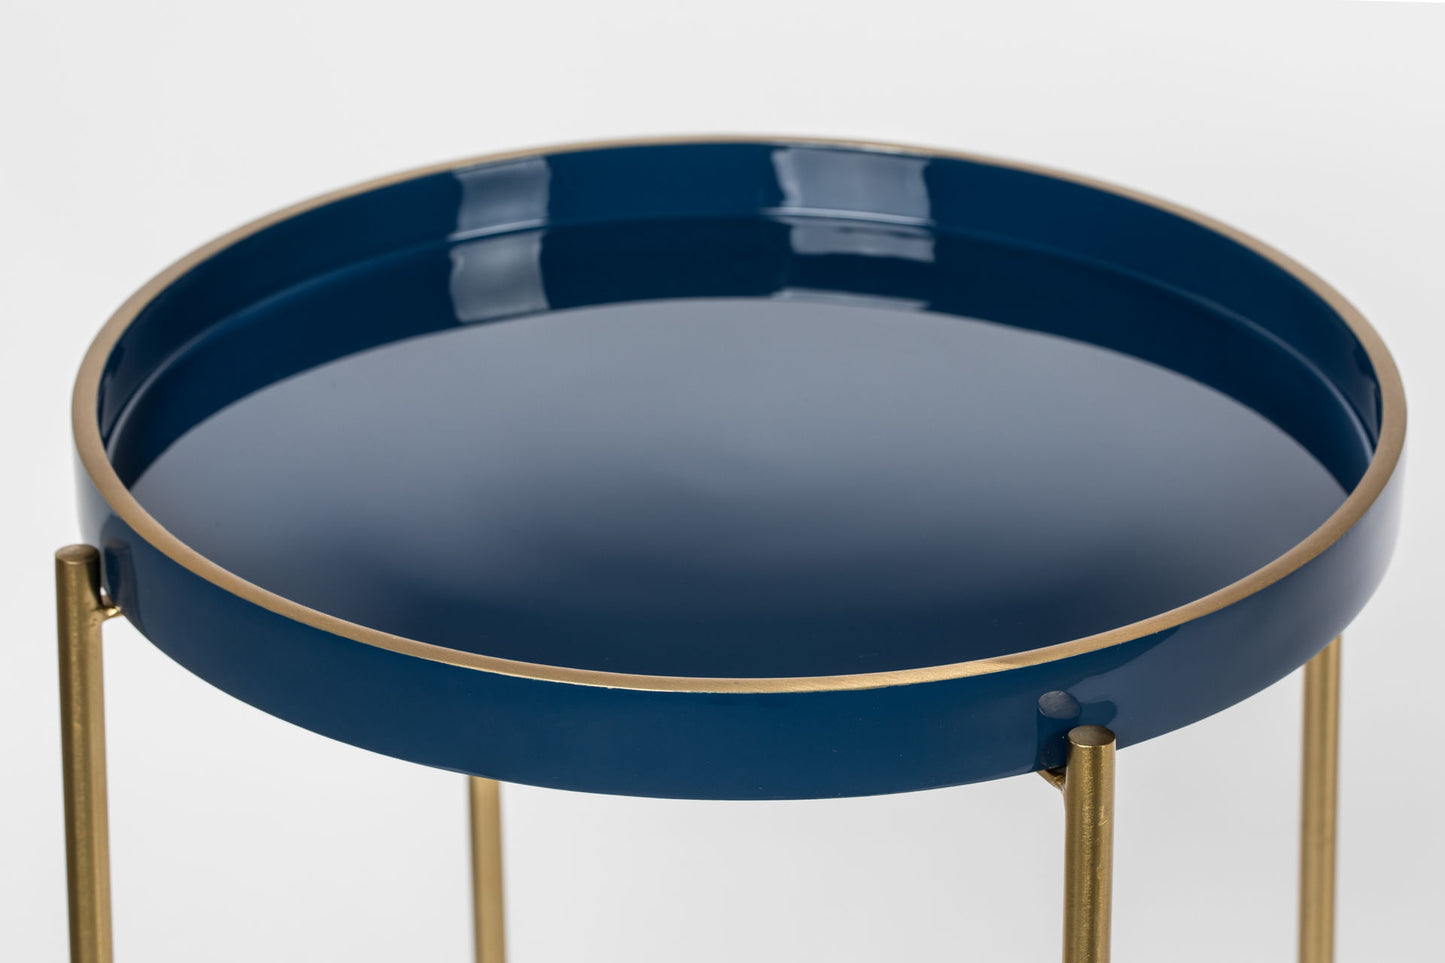 Nancy's Miller Place Table - Modern - Dark Blue - Aluminum, Iron - 42 cm x 42 cm x 55 cm